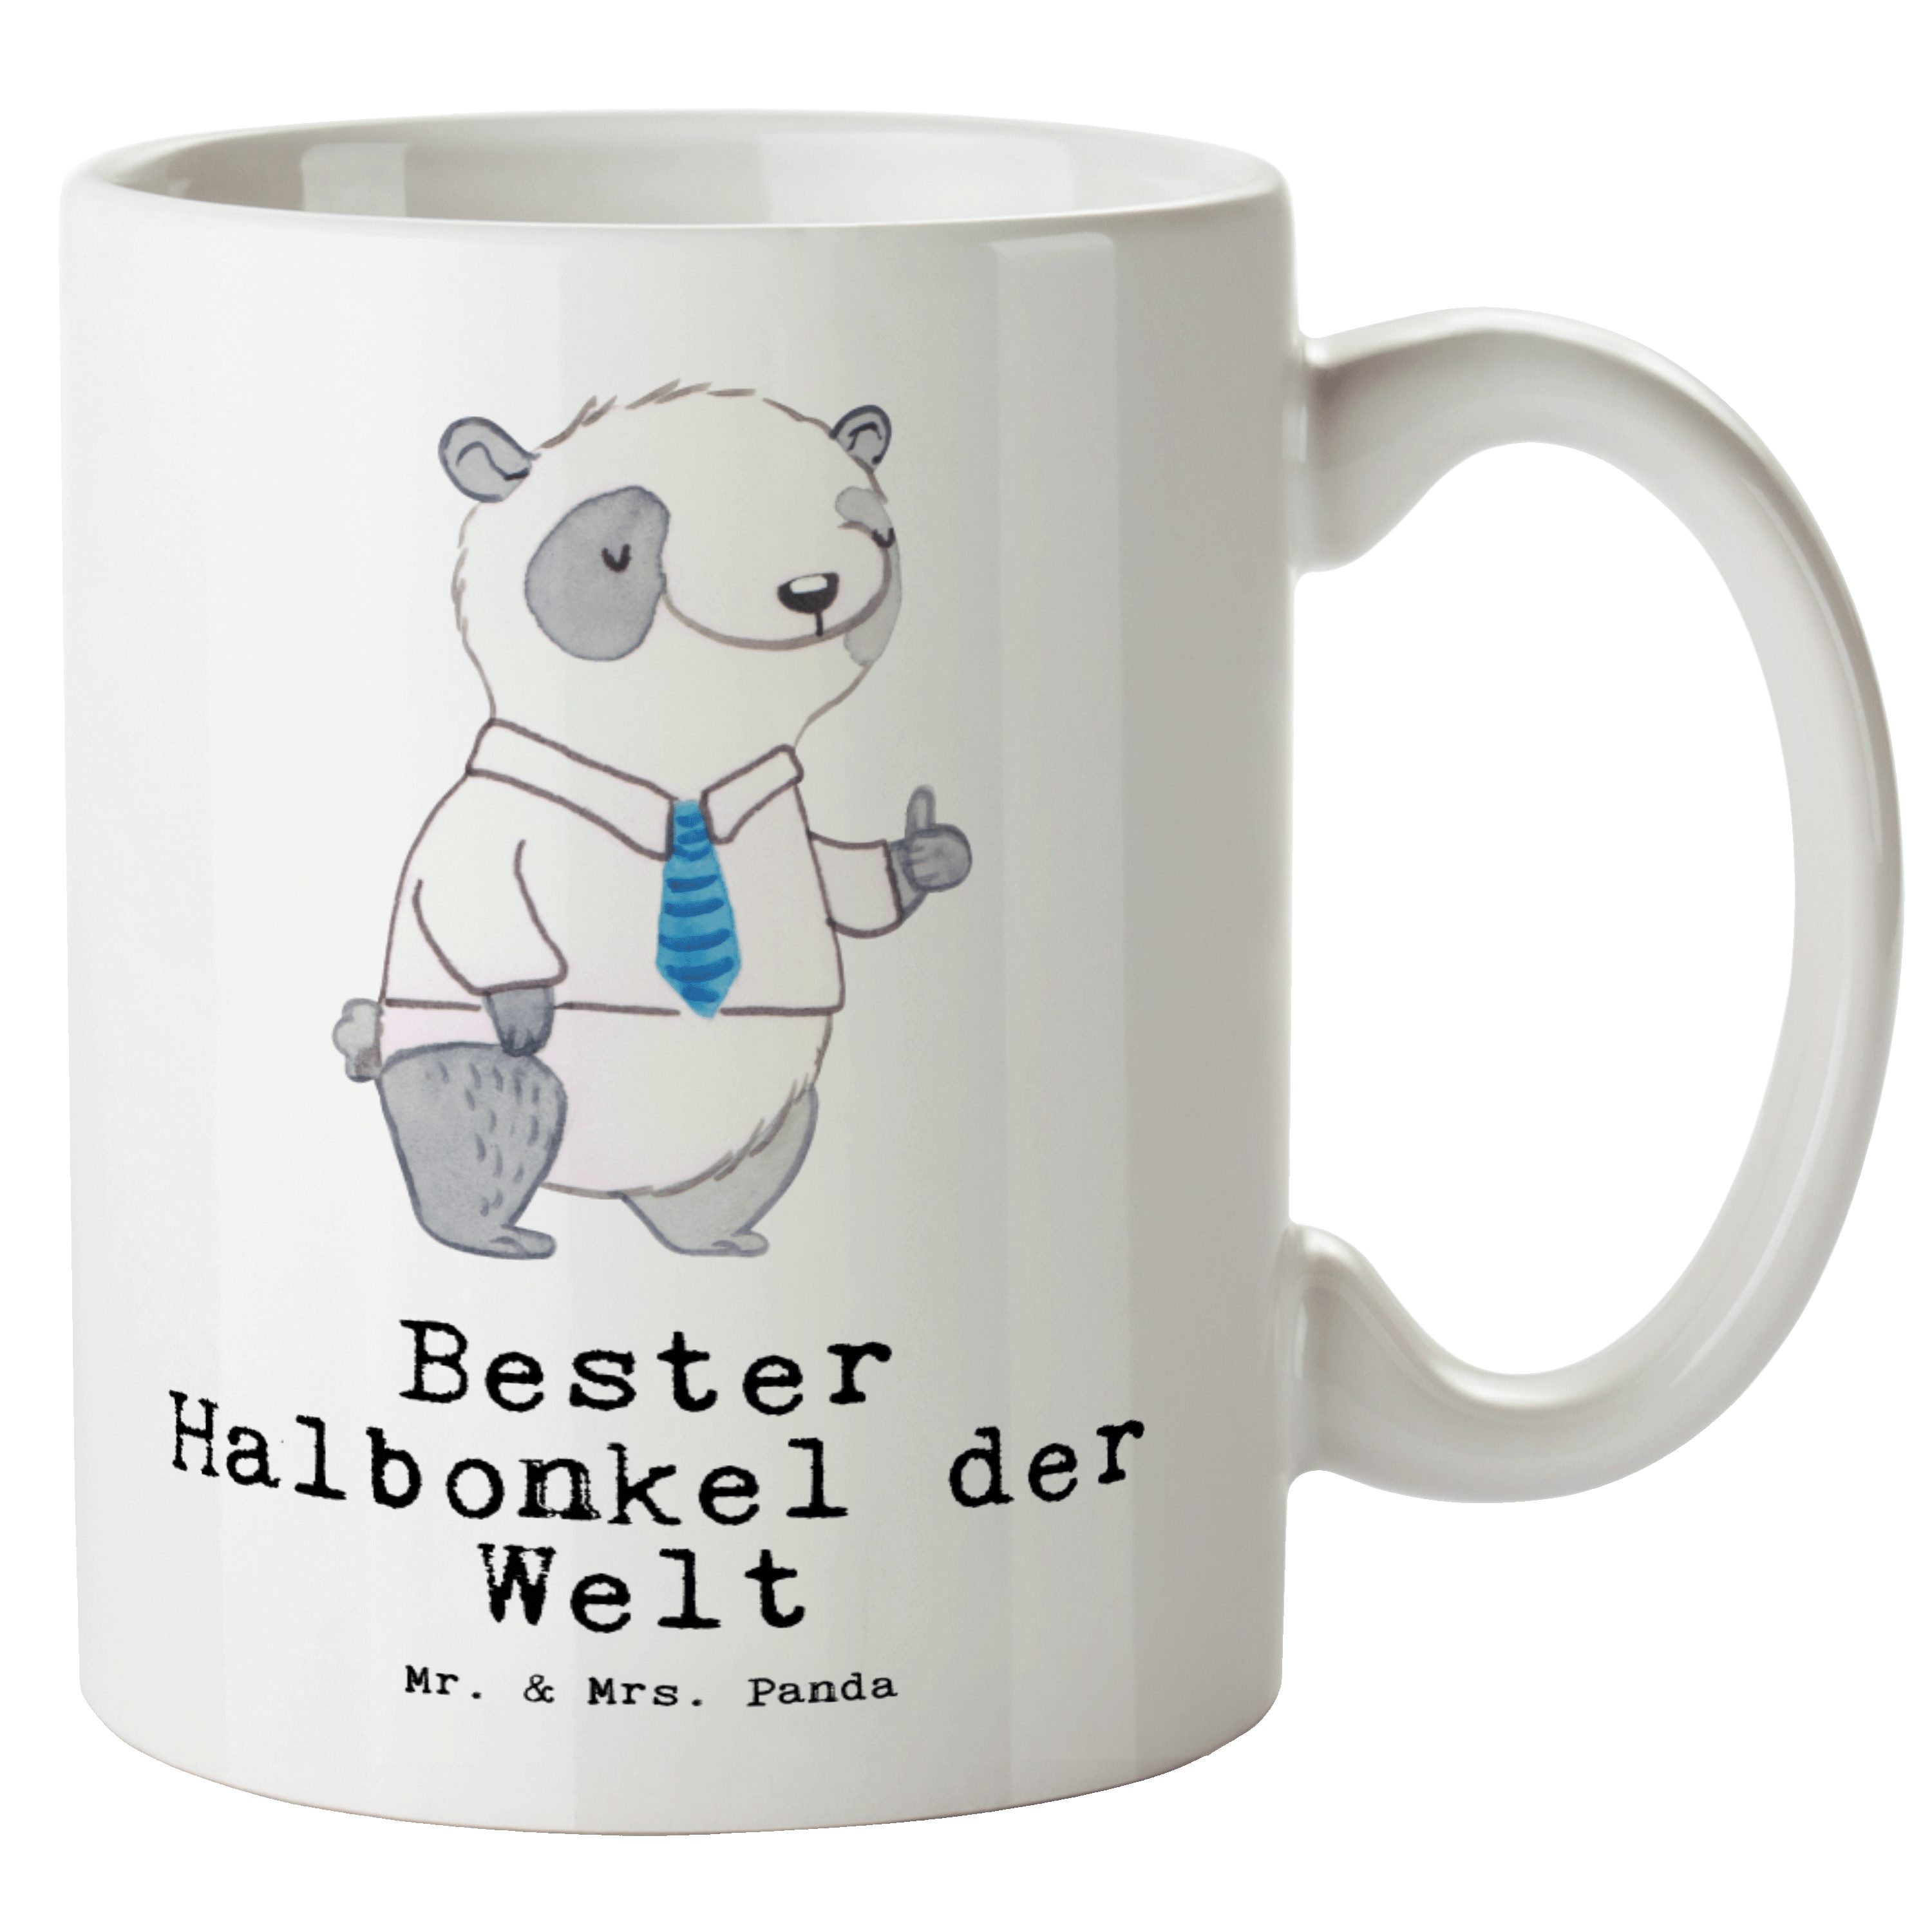 Mr. & Mrs. Panda Tasse Panda Bester Halbonkel der Welt - Weiß - Geschenk, Danke, Geschenktip, XL Tasse Keramik